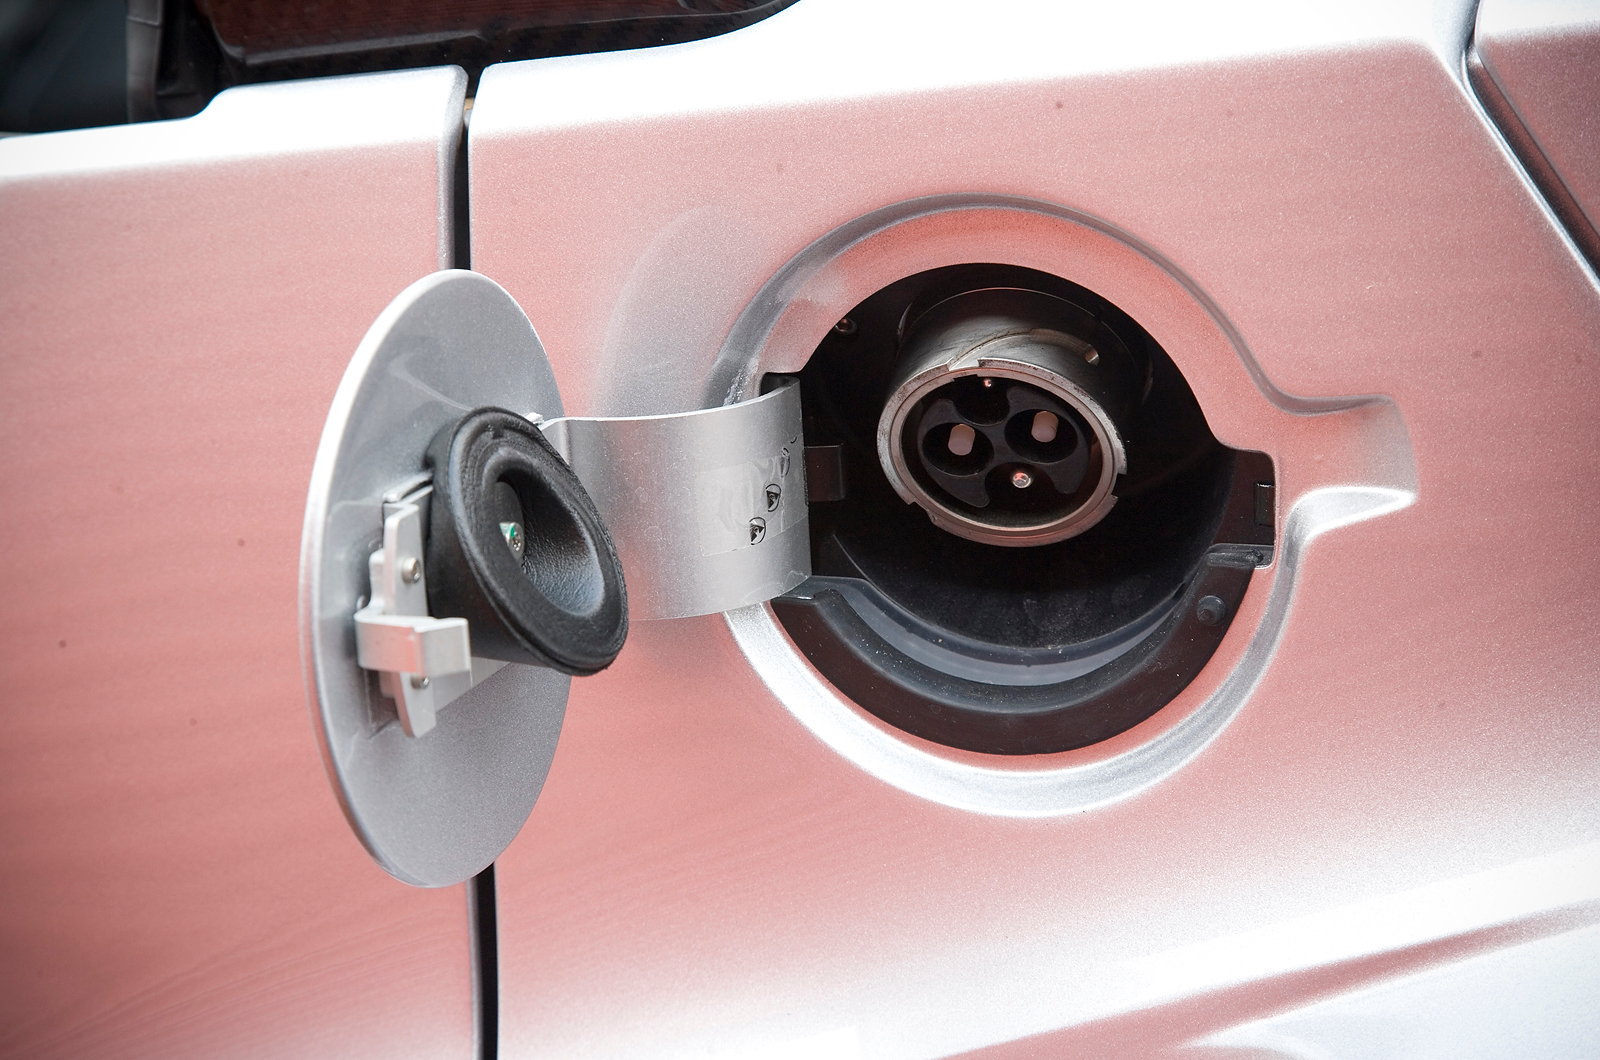 Tesla Roadster charging point